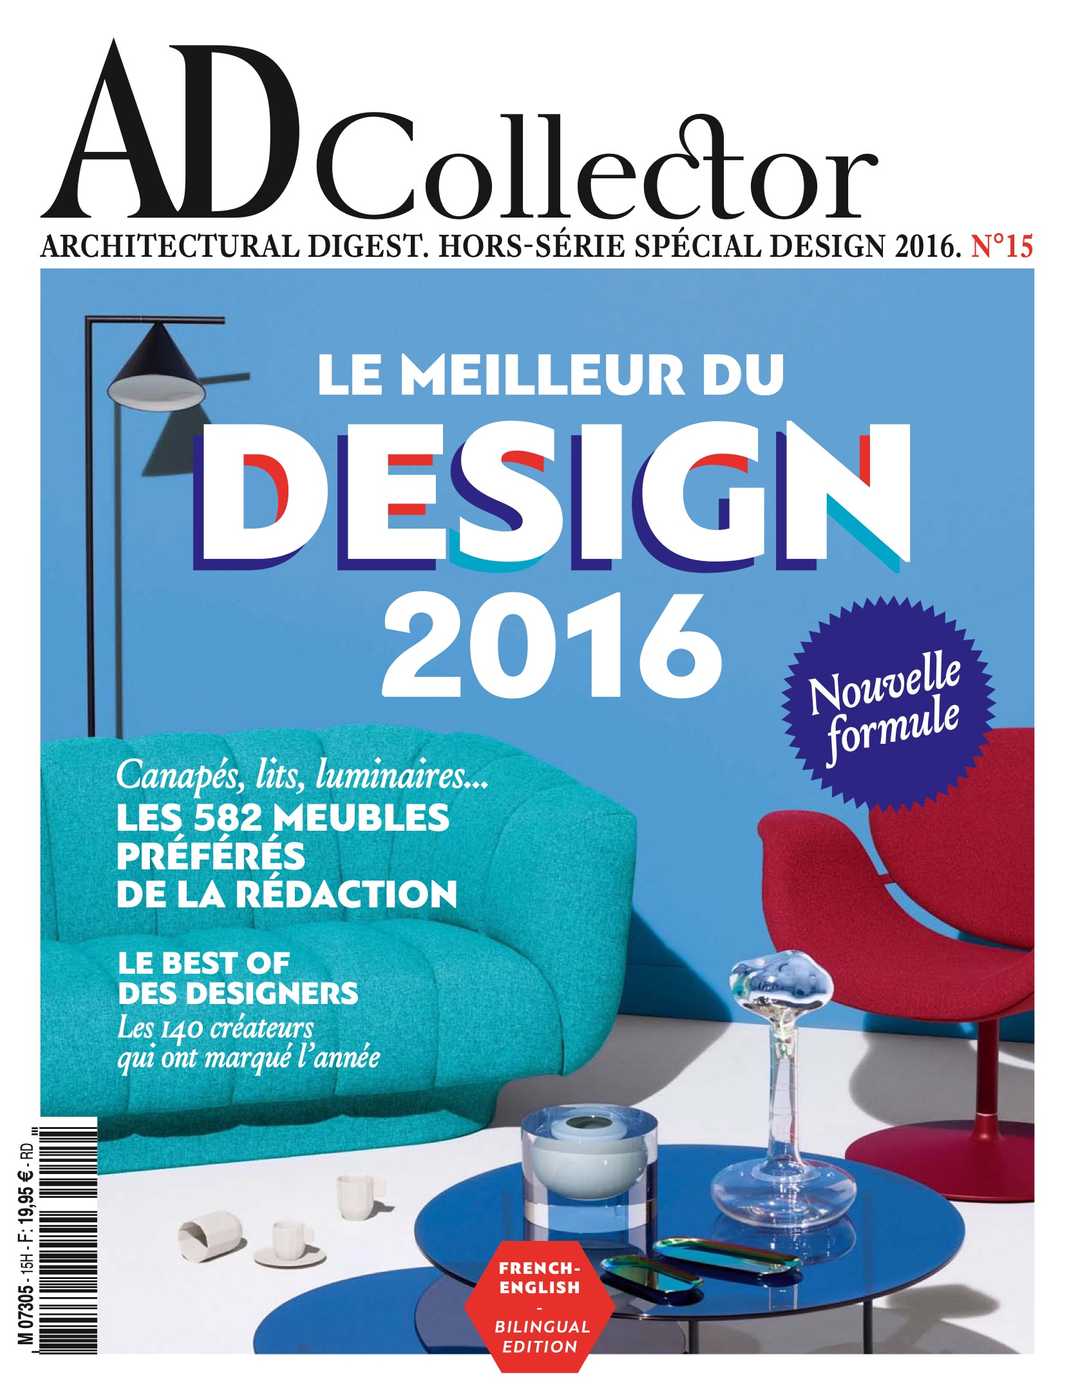 ad collector design 2016 1